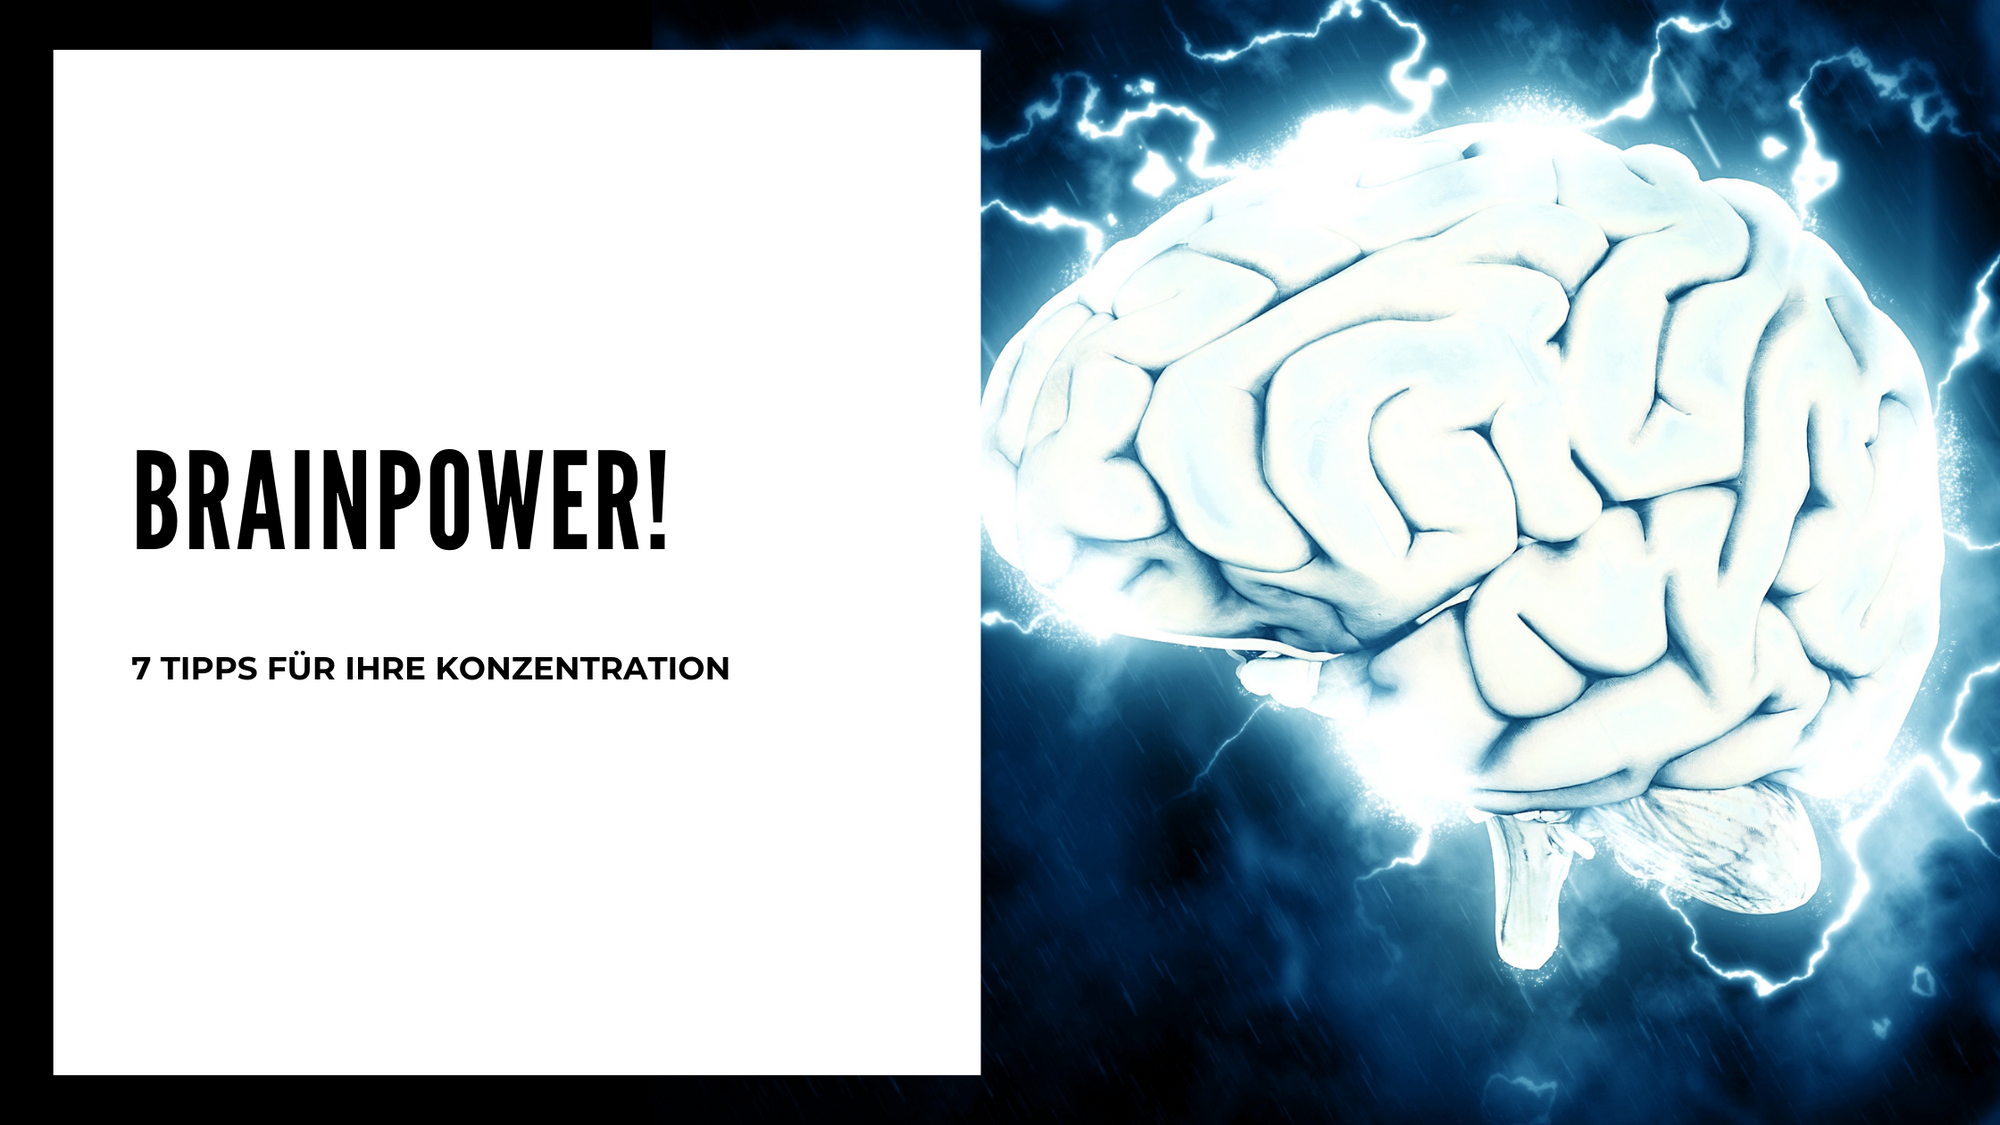 Brainpower!